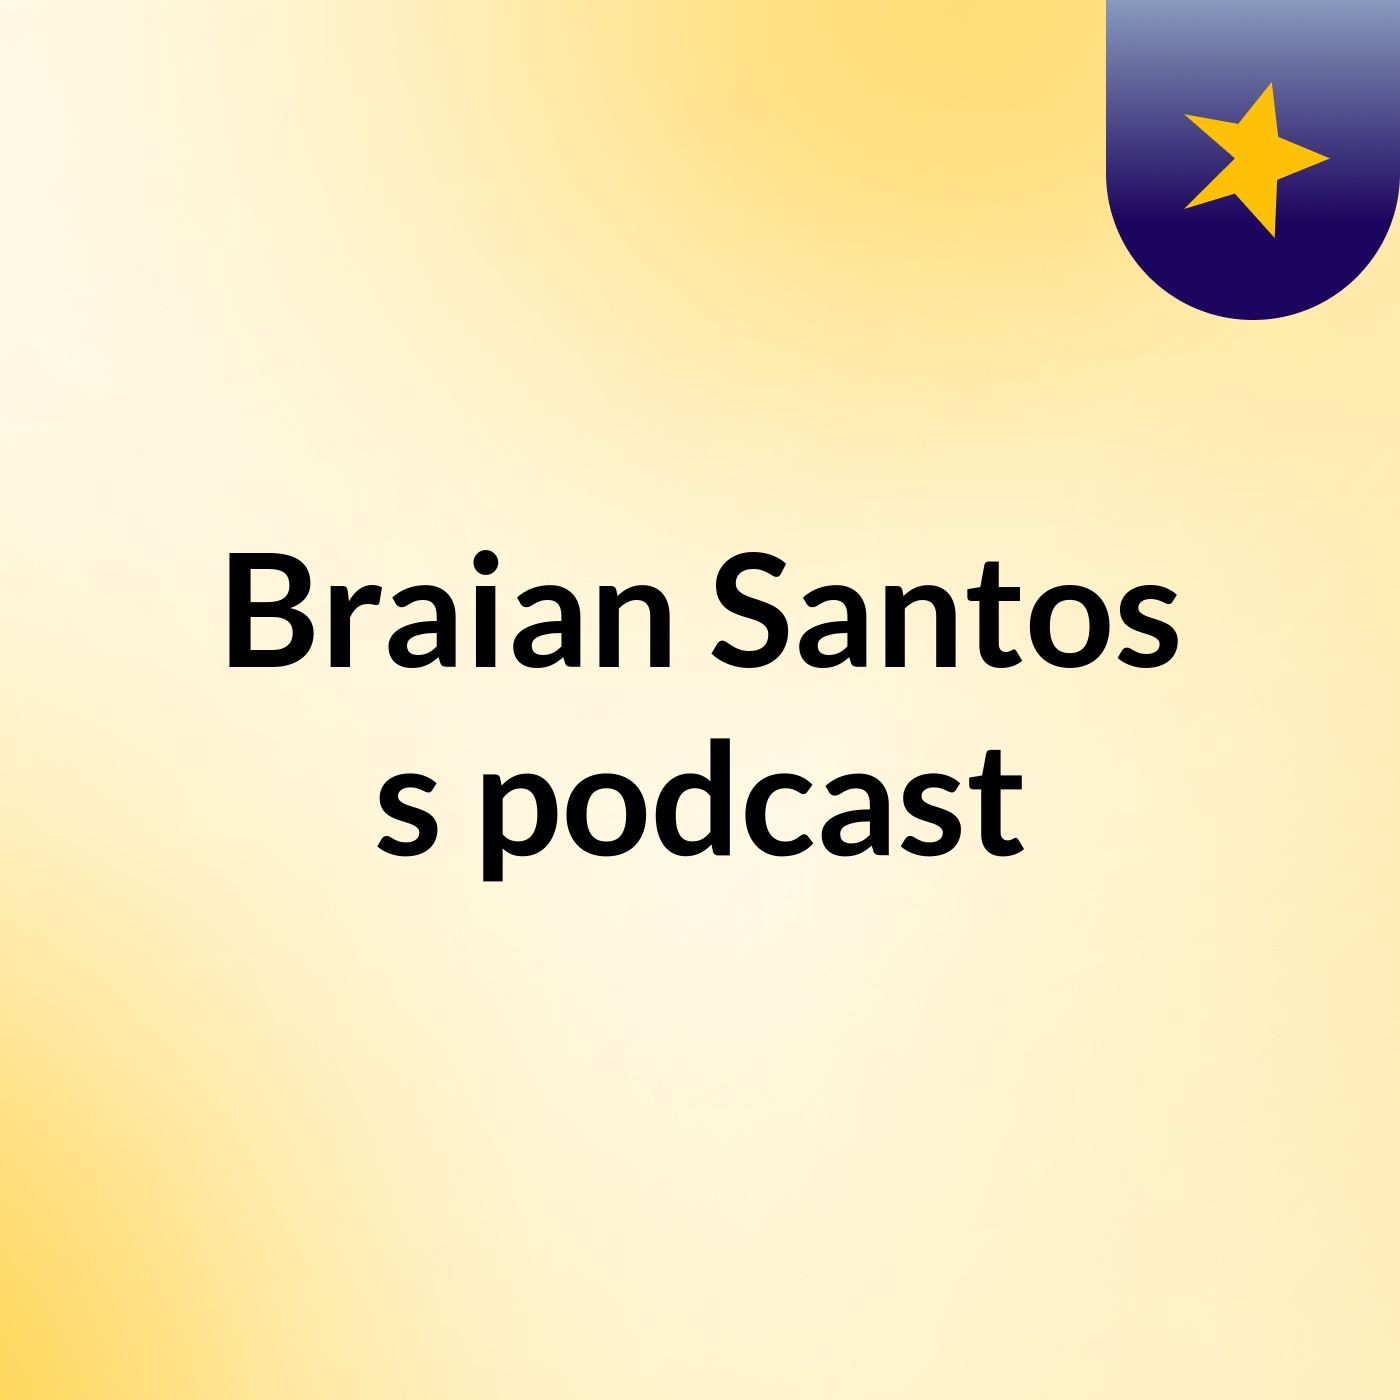 Braian Santos's podcast